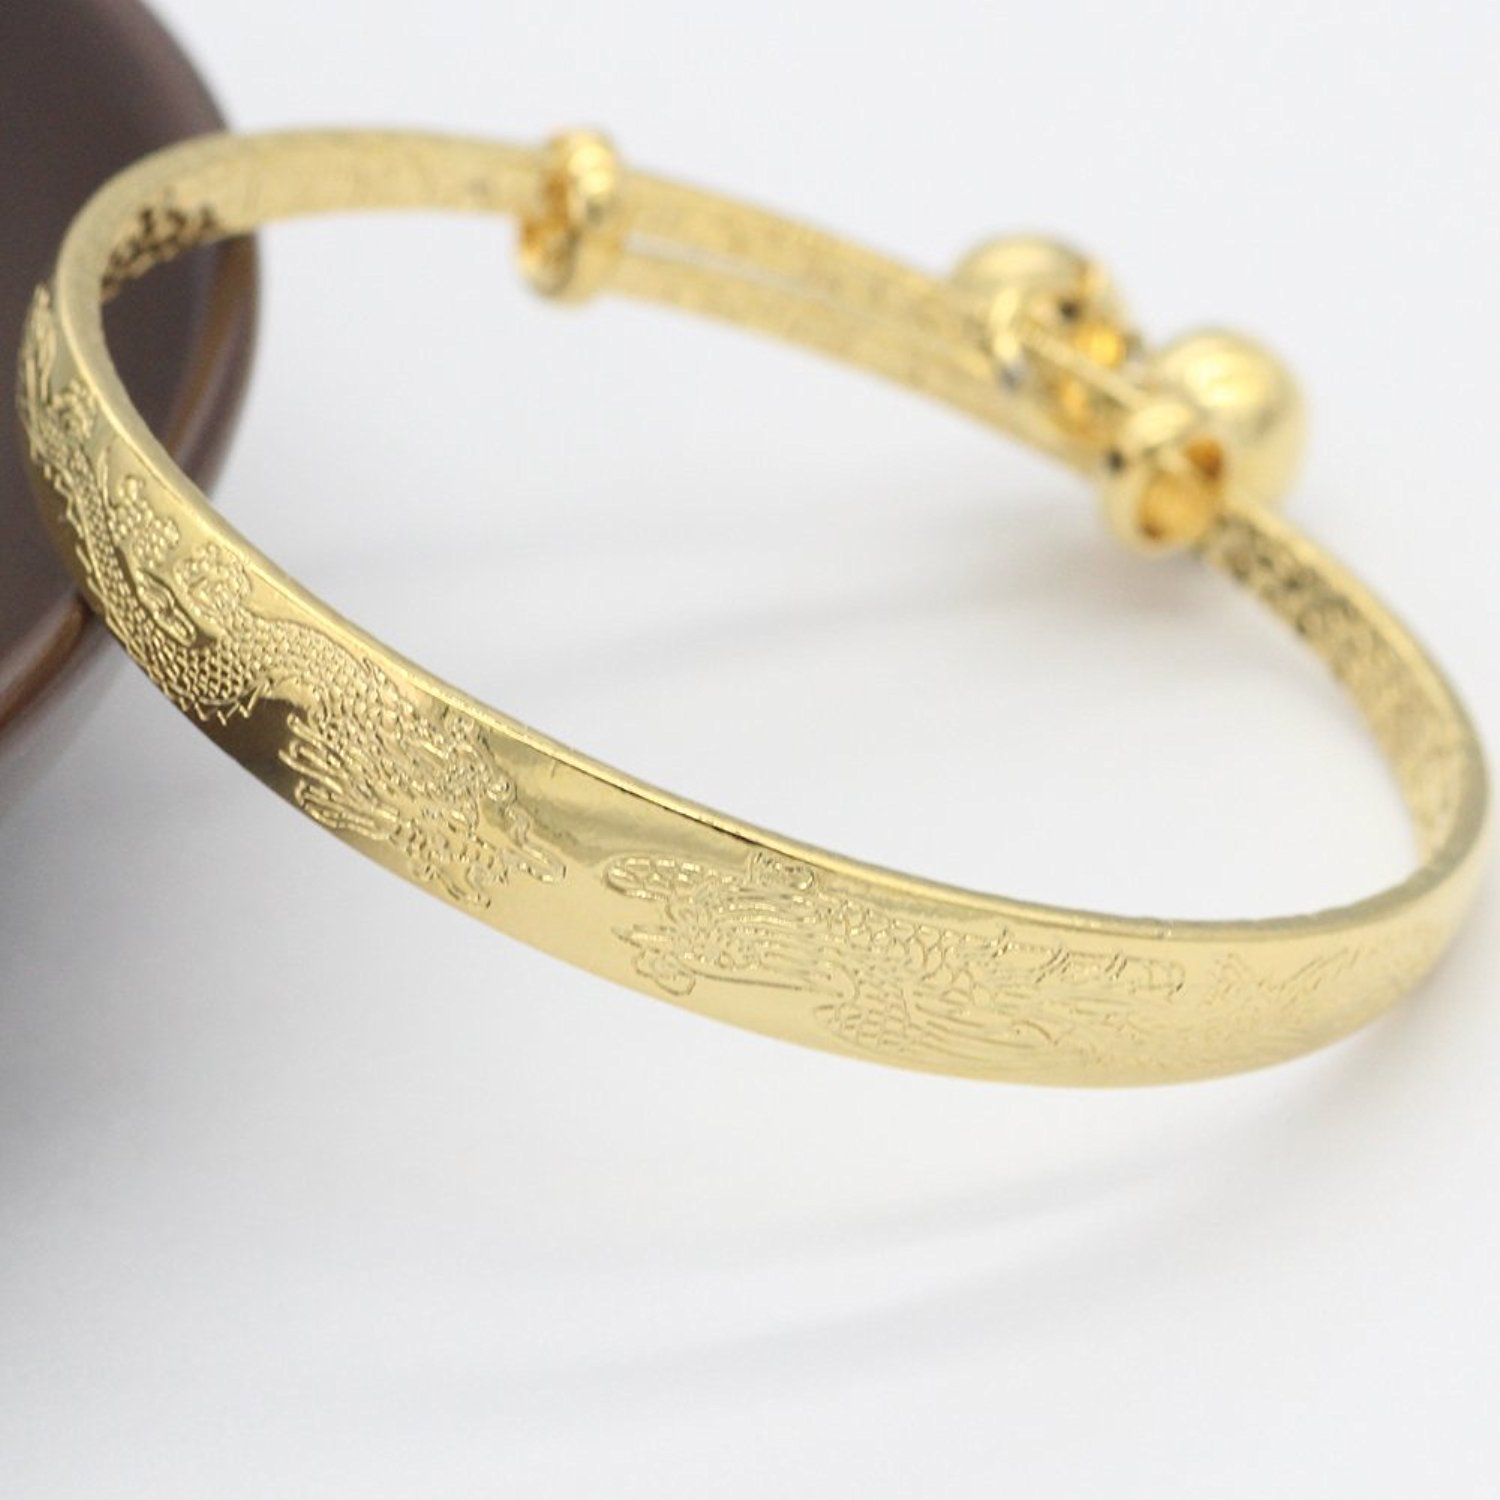 Amazon.com: loyoe jewelry 24k Yellow Gold Plated Baby's Bracelet ...